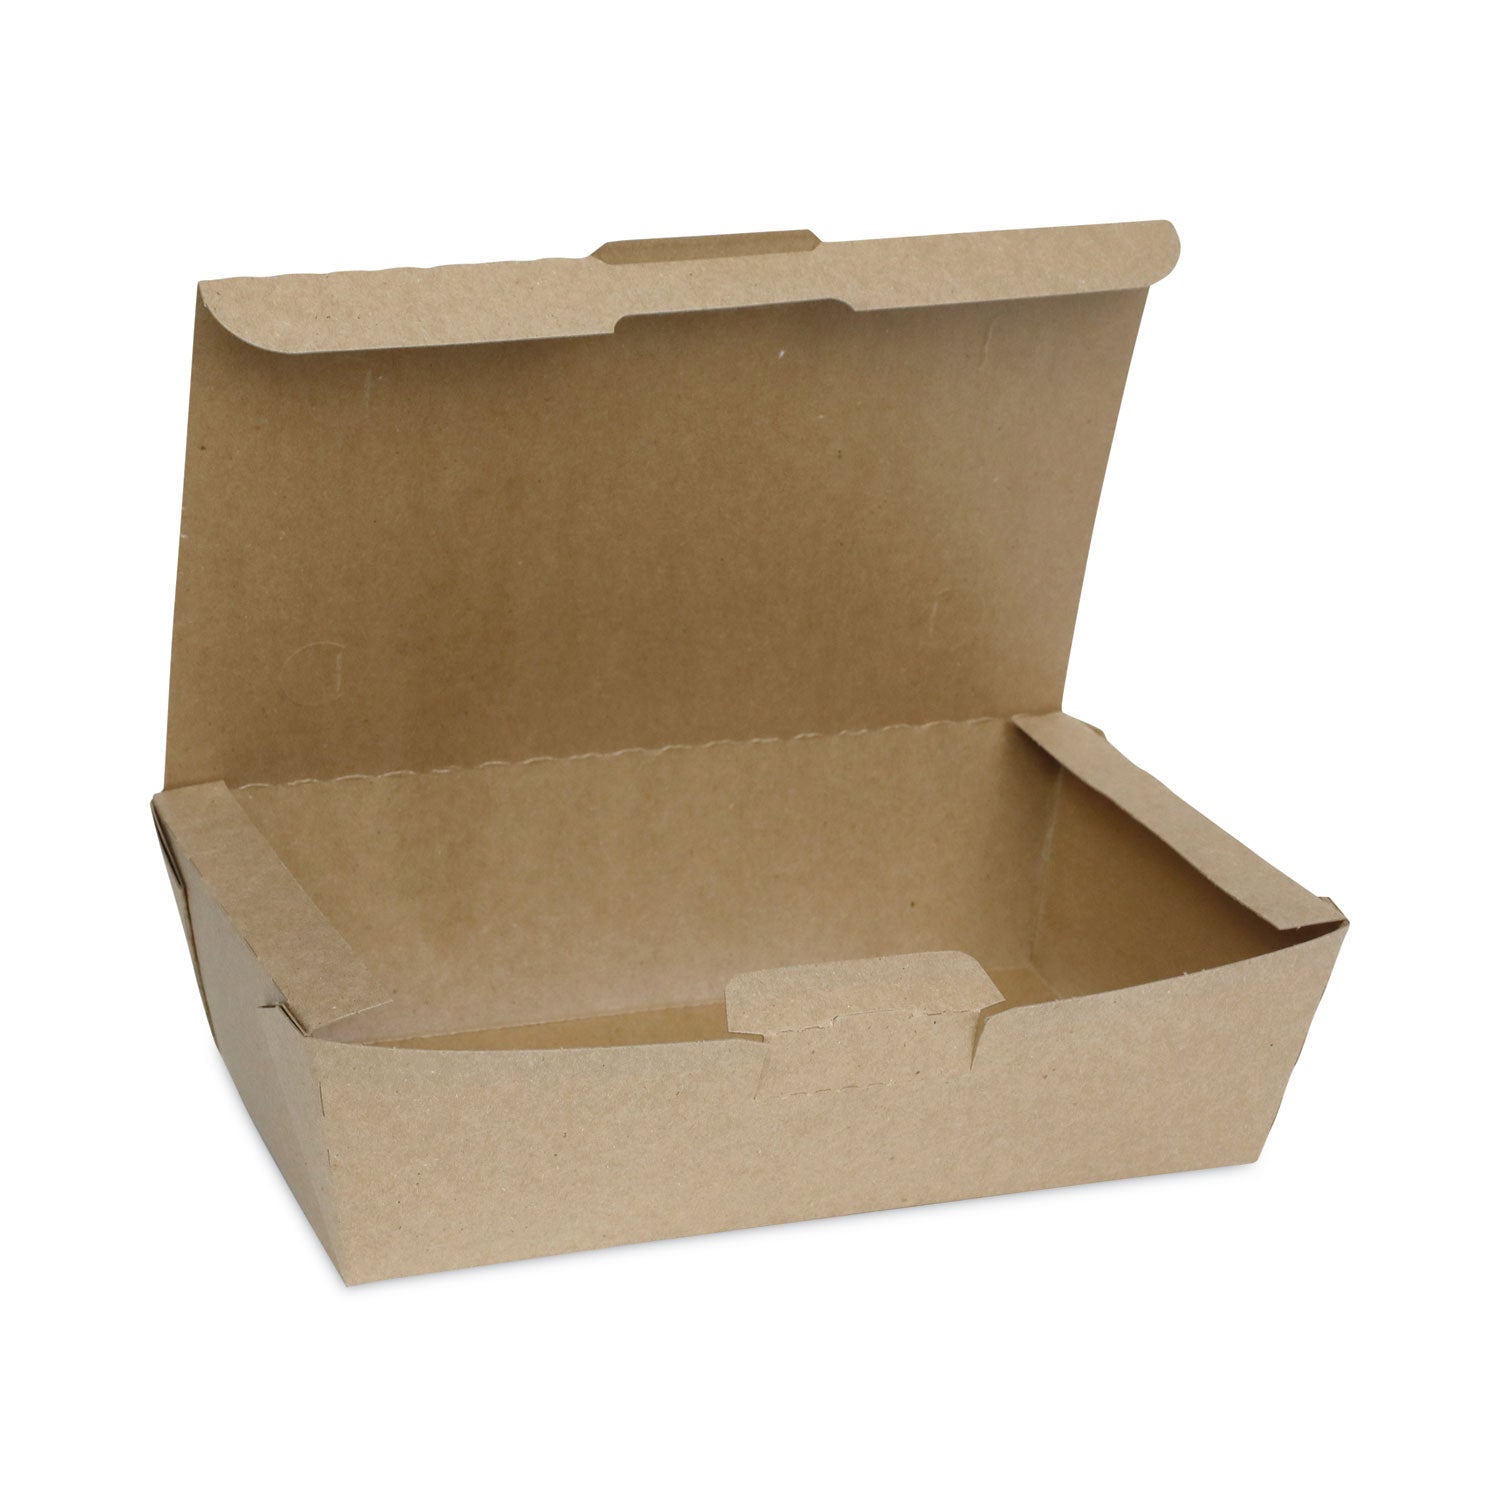 earthchoice-tamper-evident-onebox-paper-box-904-x-485-x-275-kraft-162-carton_pctnob04skecte - 1